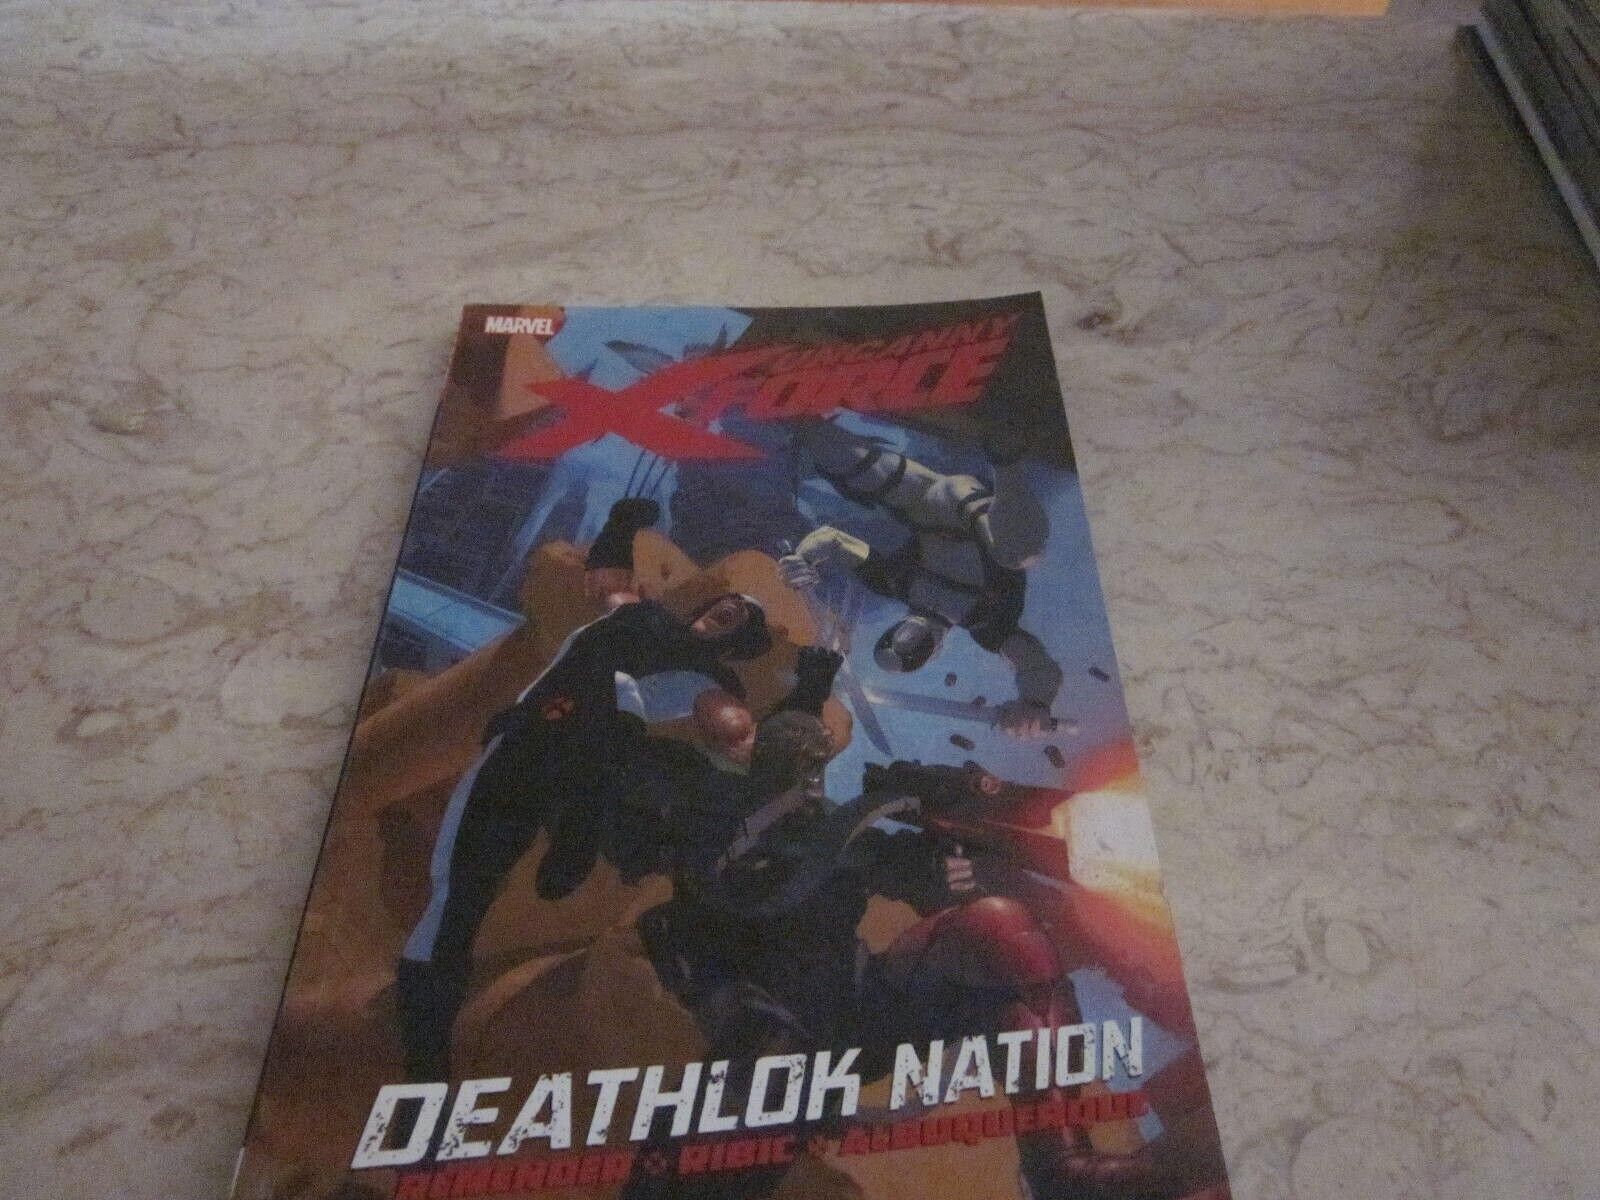 Uncanny X-Force Volume 2: Deathlok Nation